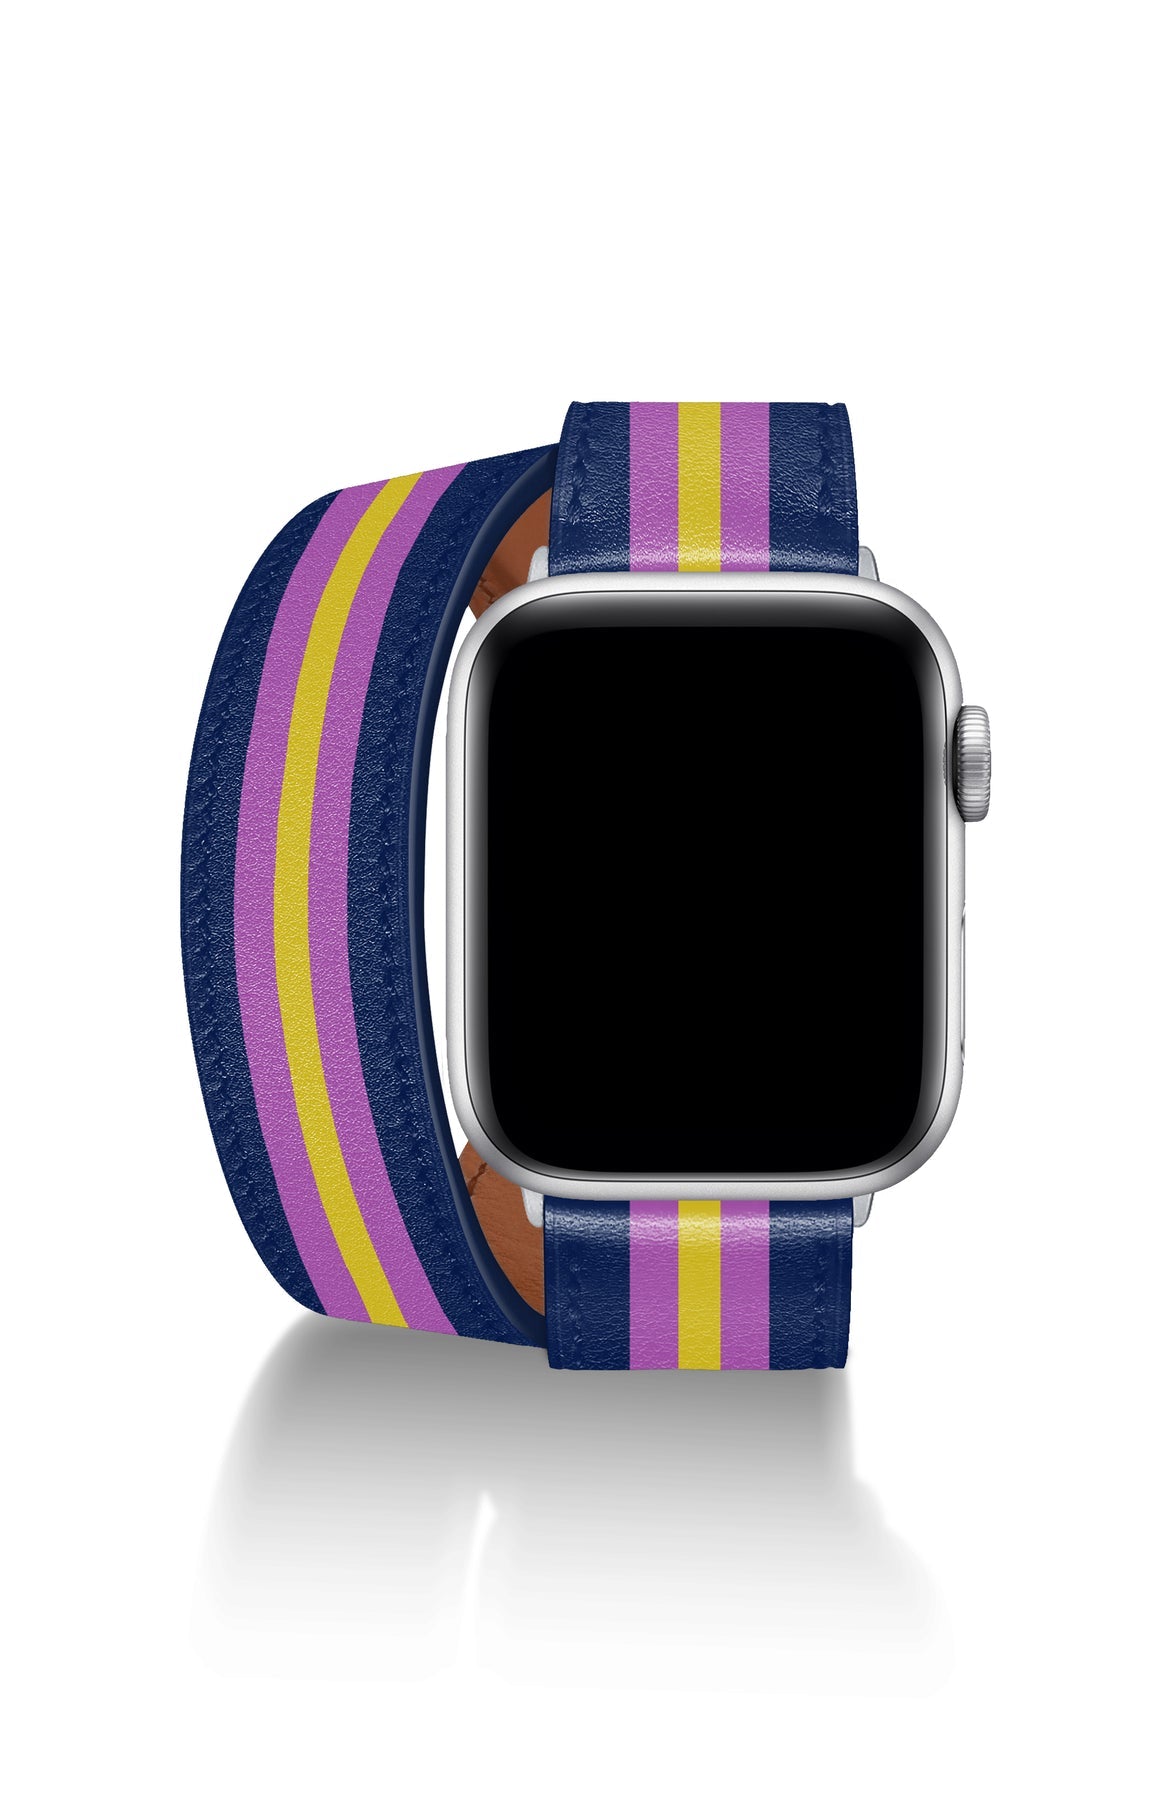 Double Strap for Apple Watch - Daytona